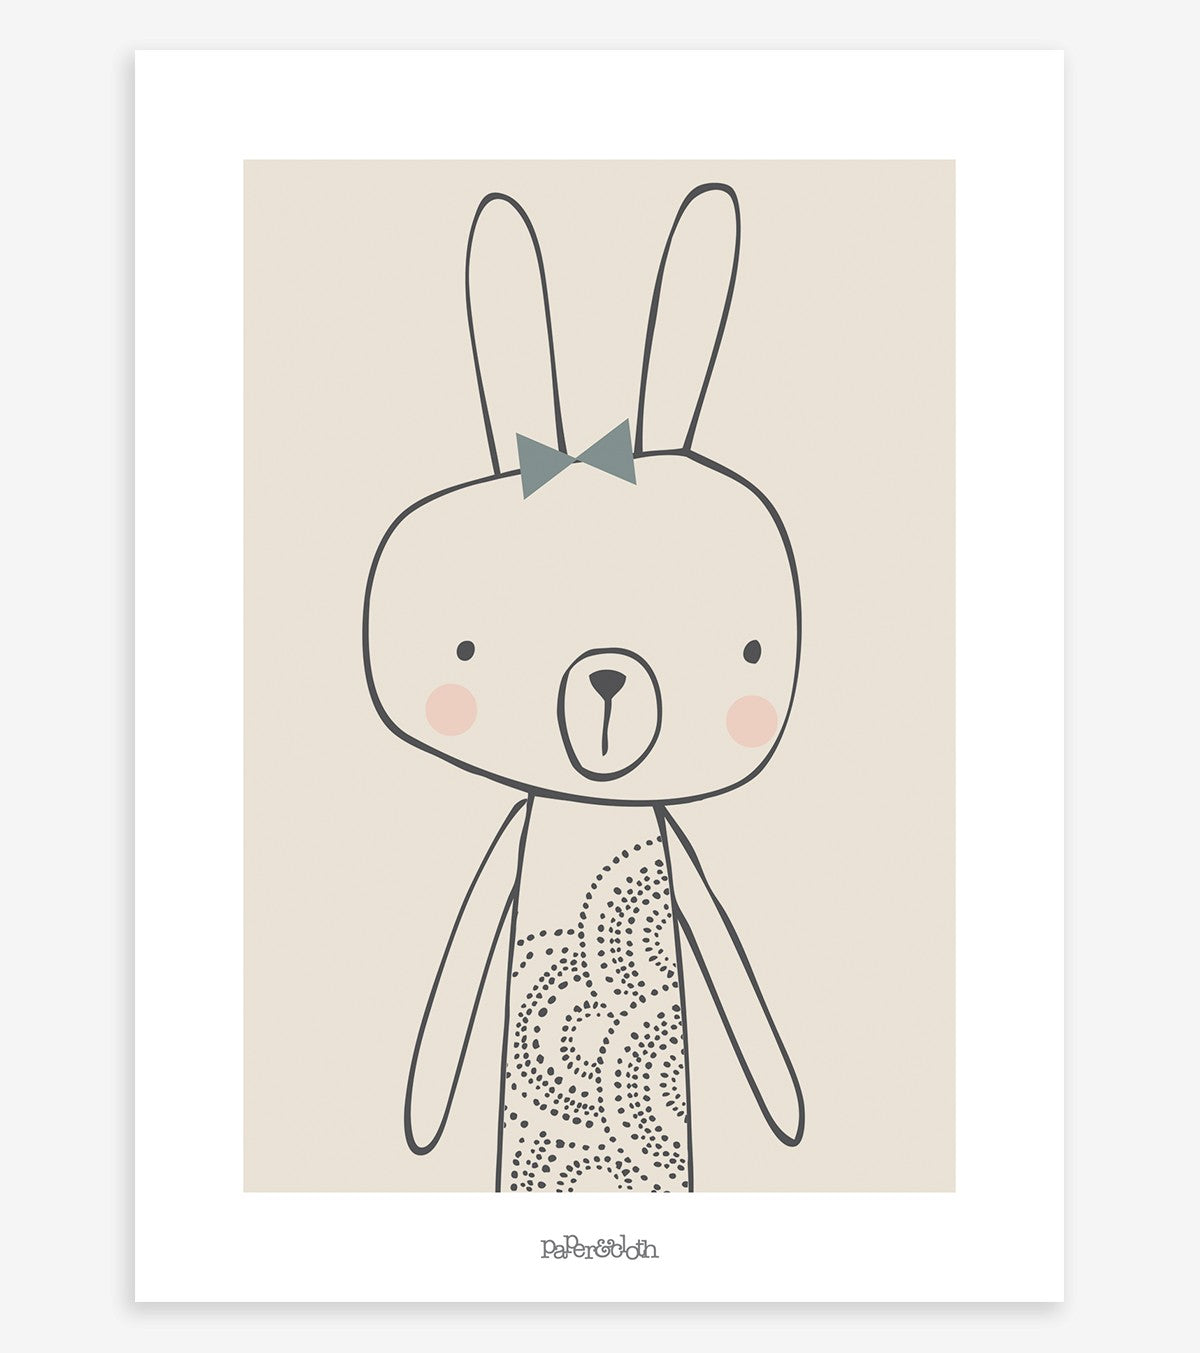 LITTLE FRIENDS - Children's poster - The rabbit